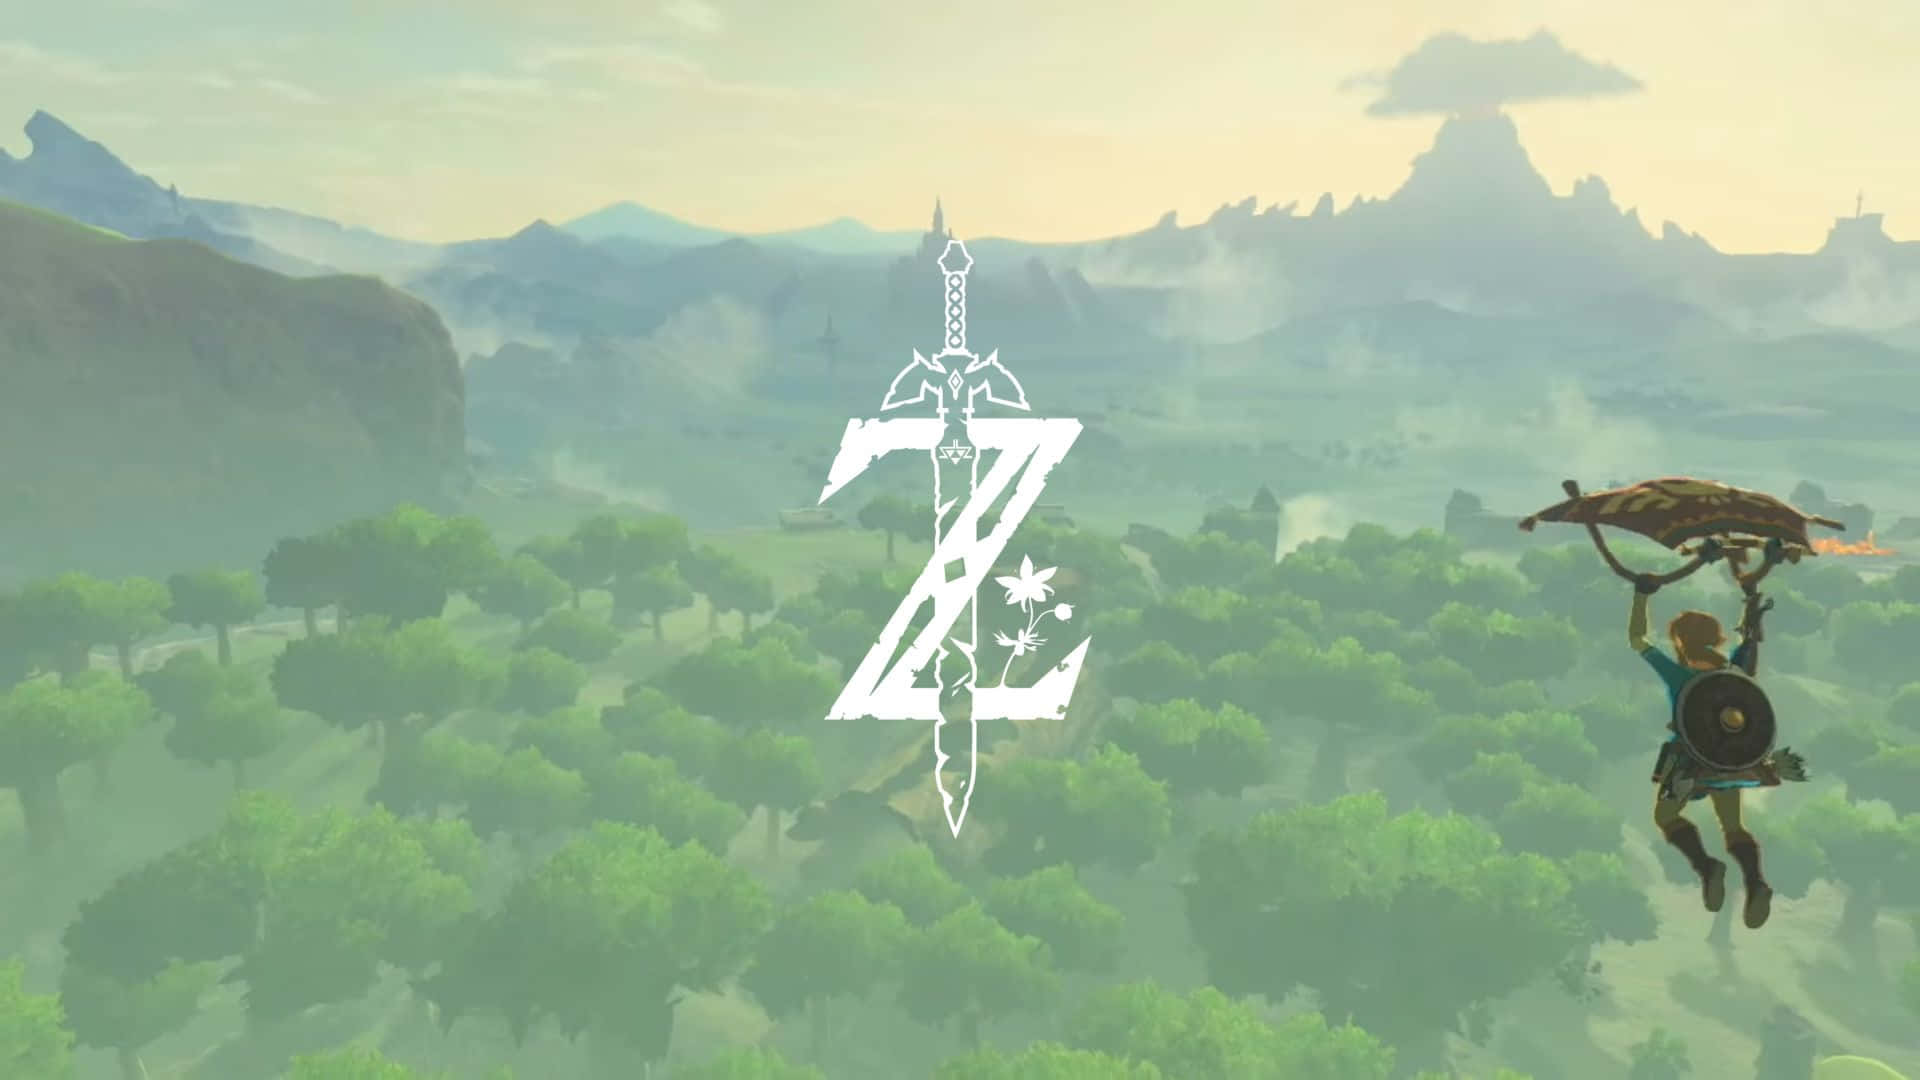 Impresionantevista Del Paisaje De Hyrule En The Legend Of Zelda: Breath Of The Wild.